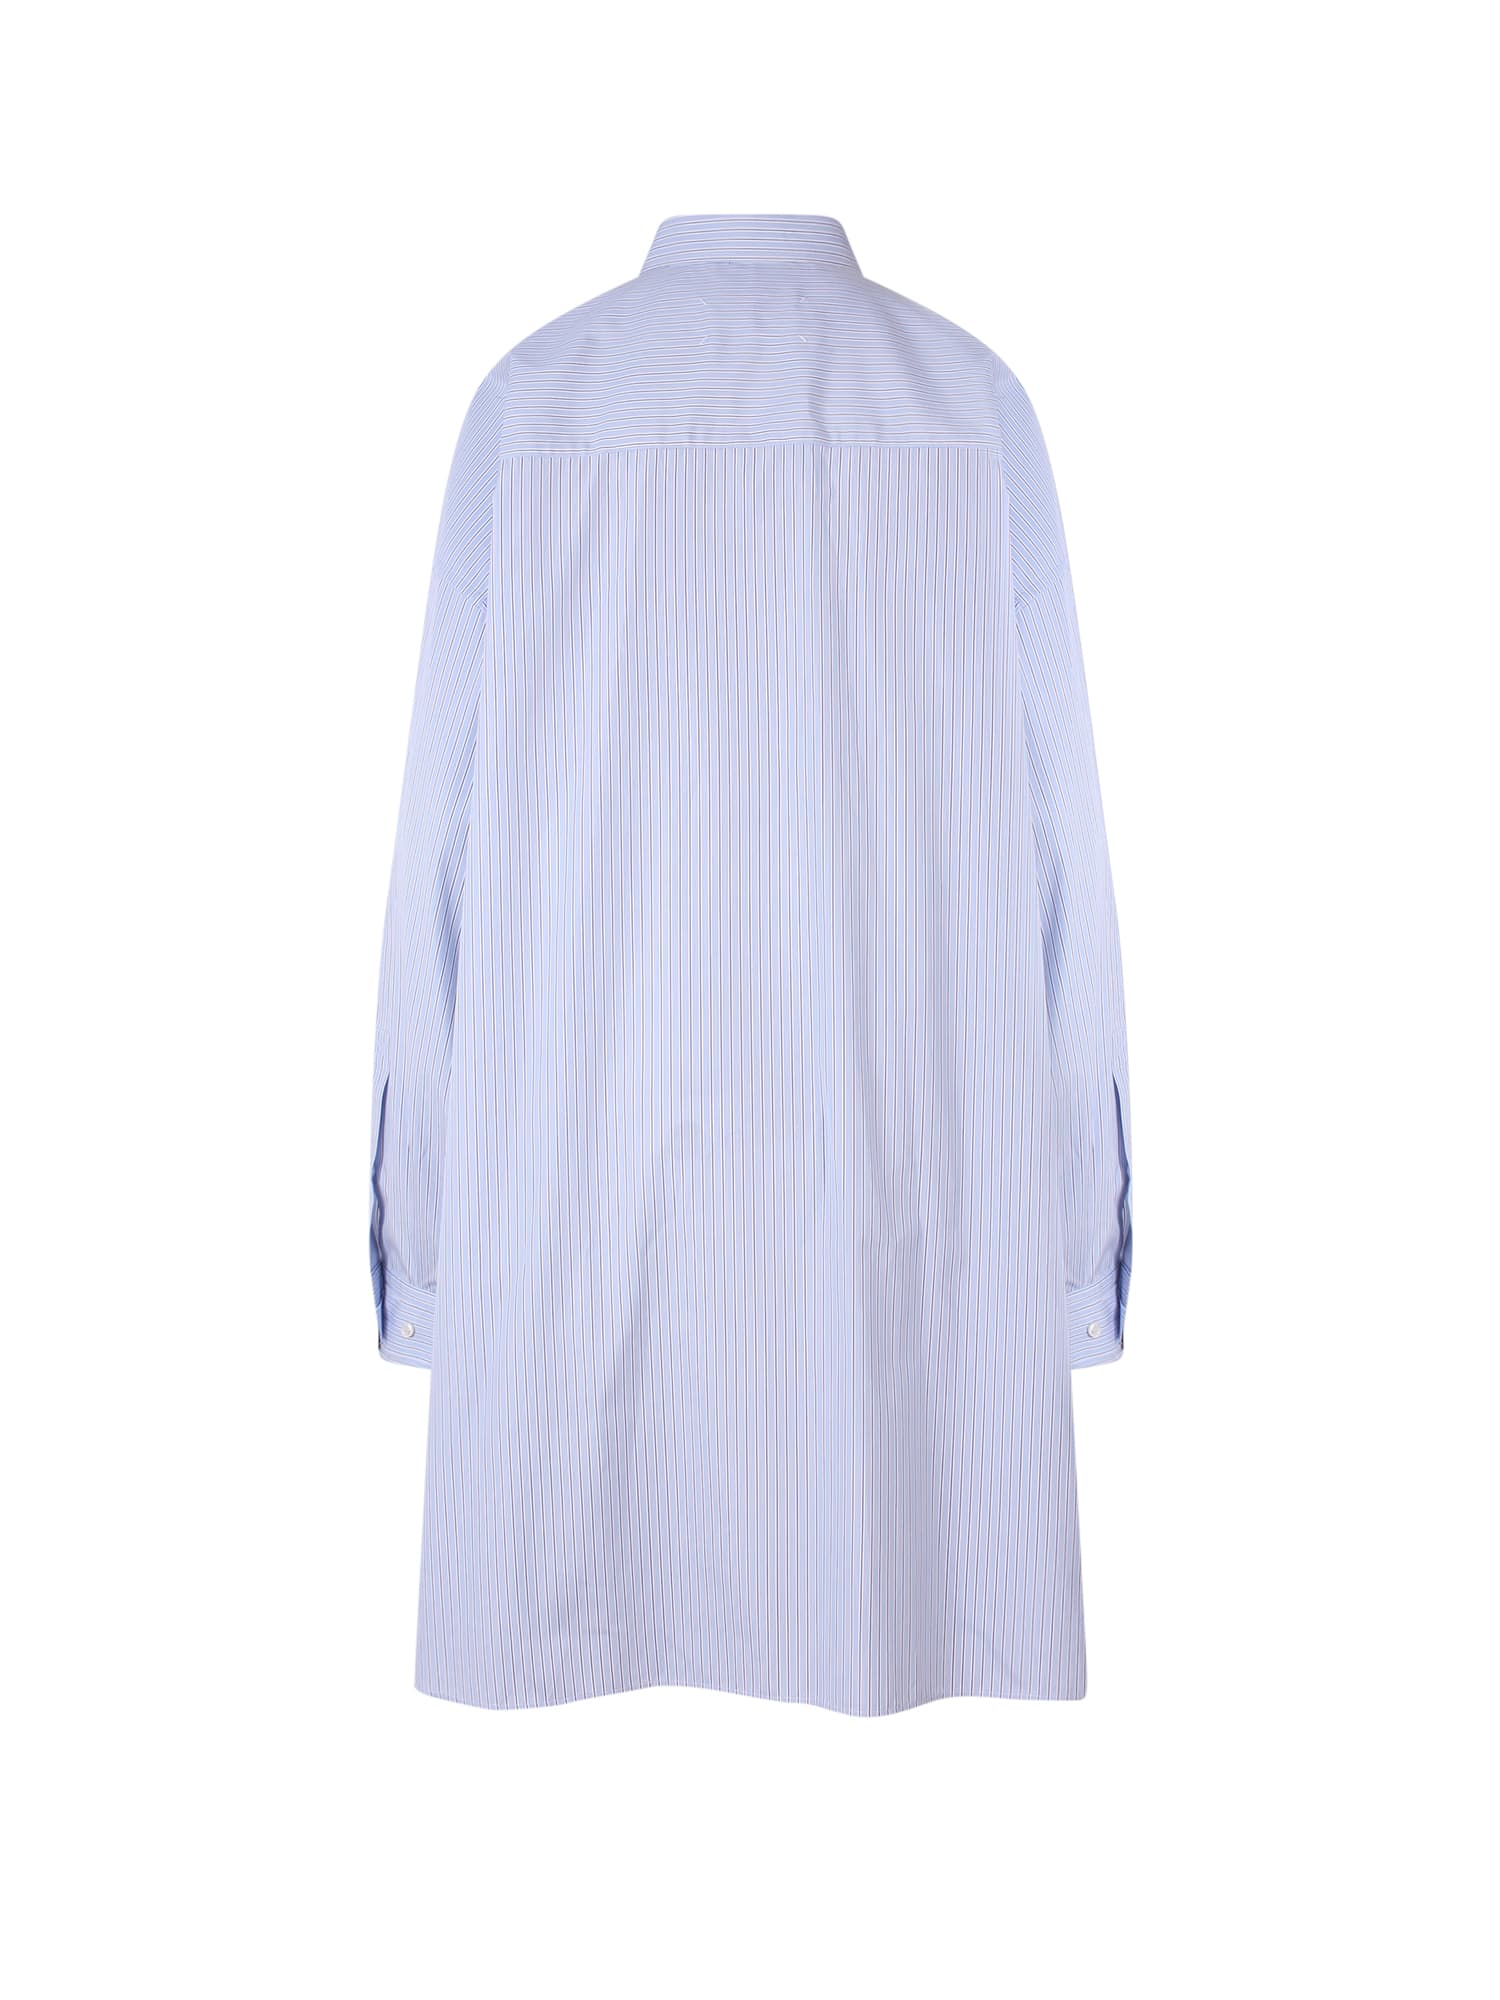 Shop Maison Margiela Oversized Stripe Shirt Dress In White & Blue Stripes